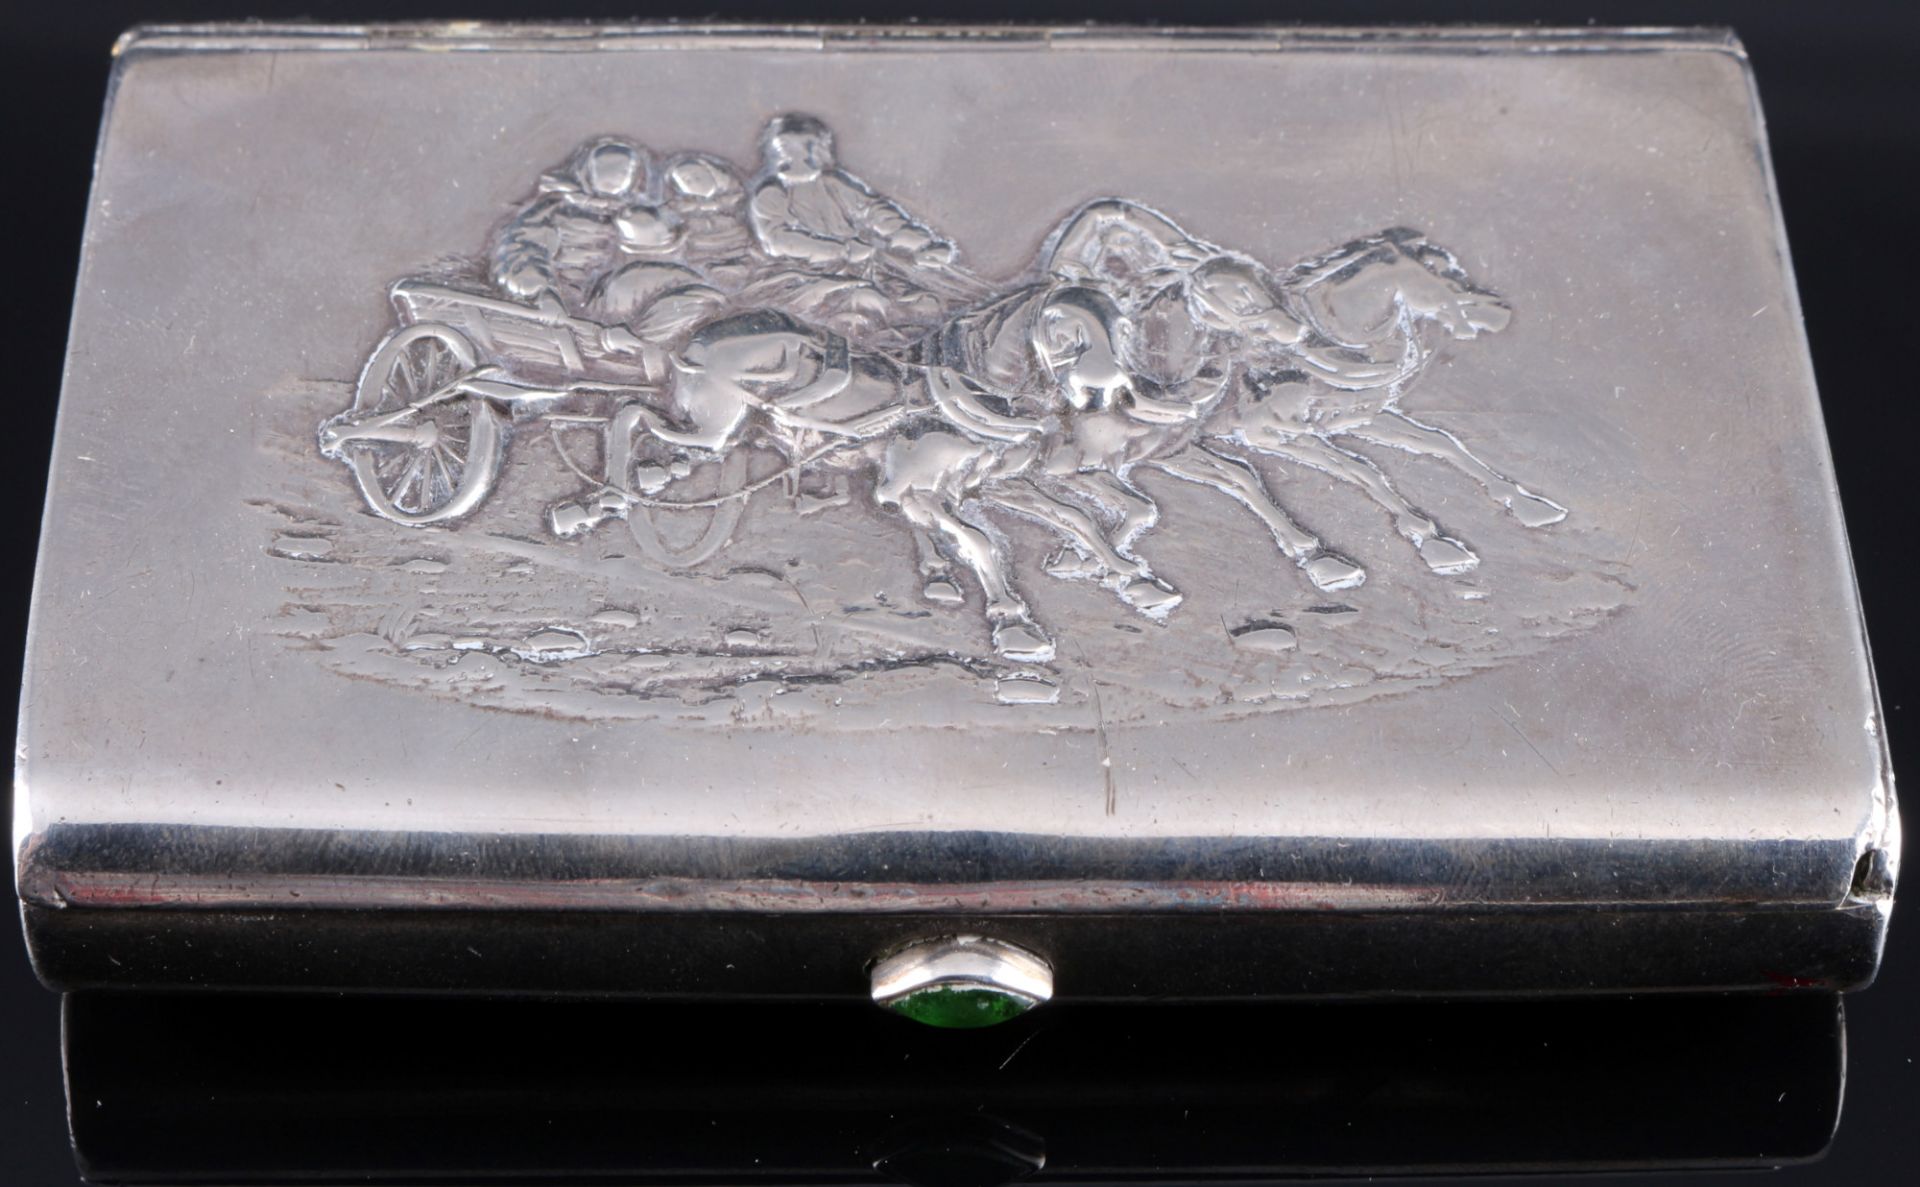 Russia 84 Zolotniki silver tabacco box, 1908-1926, Russland Silber Tabakdose, - Image 2 of 4